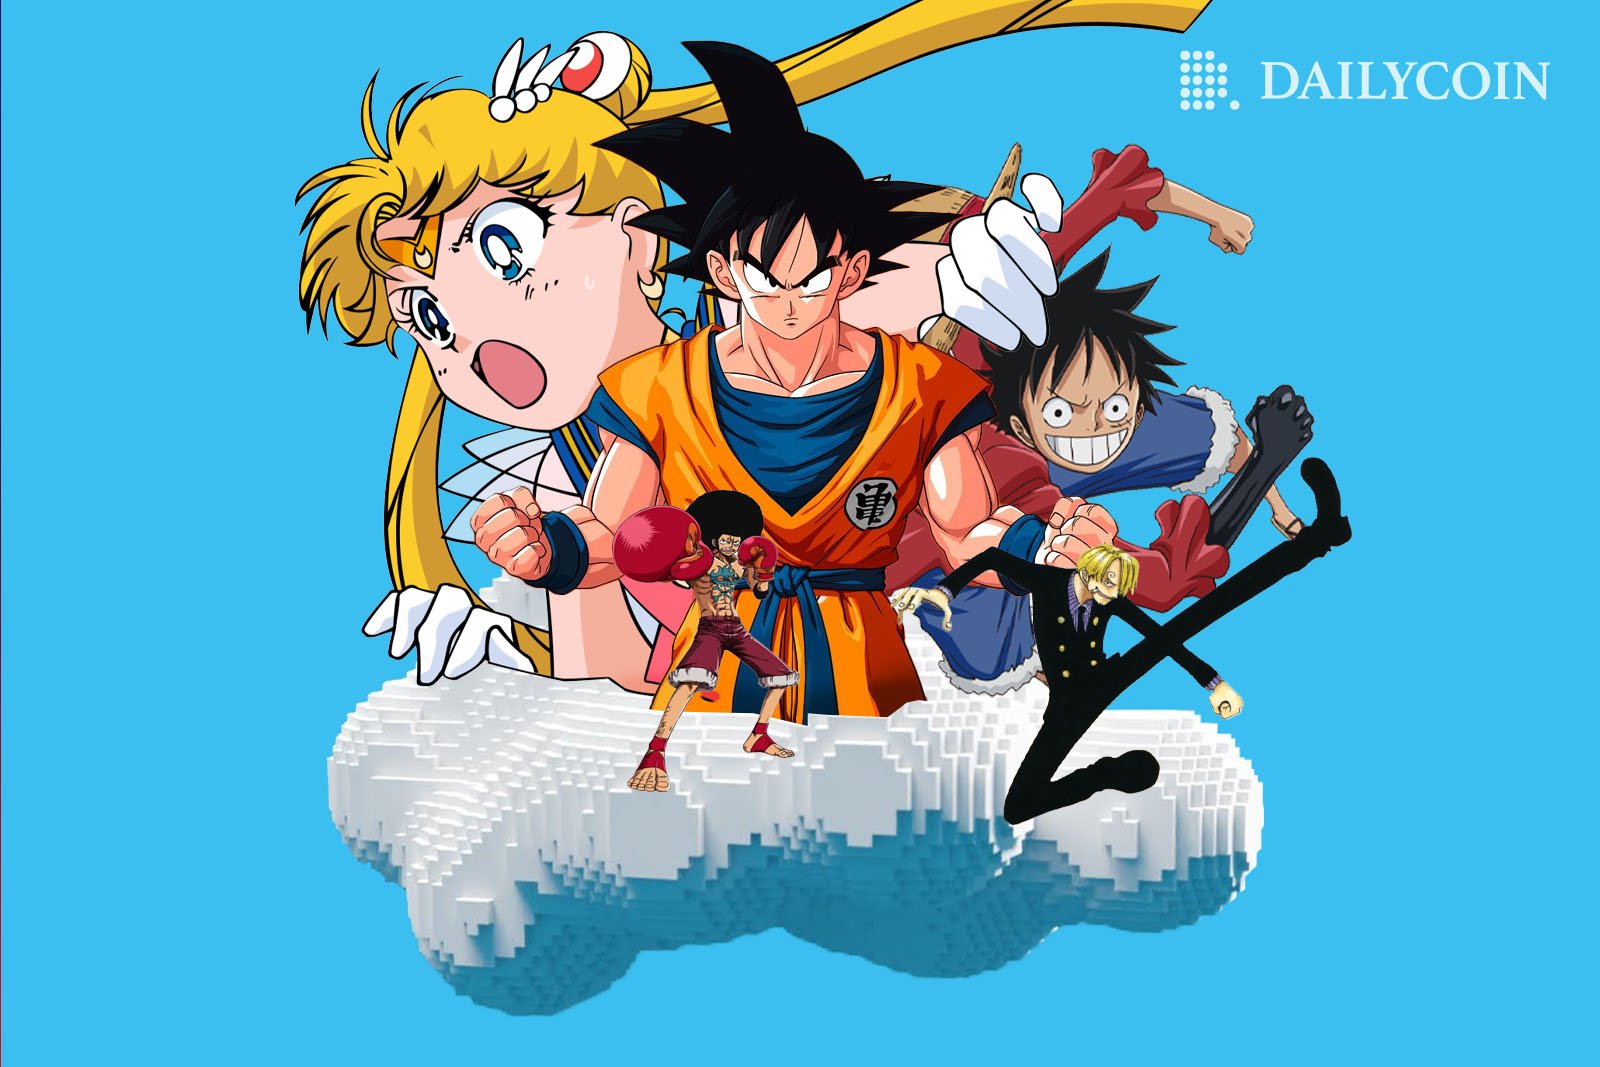 Goku, Luffy, and Sailor Moon in the Sandbox Metaverse